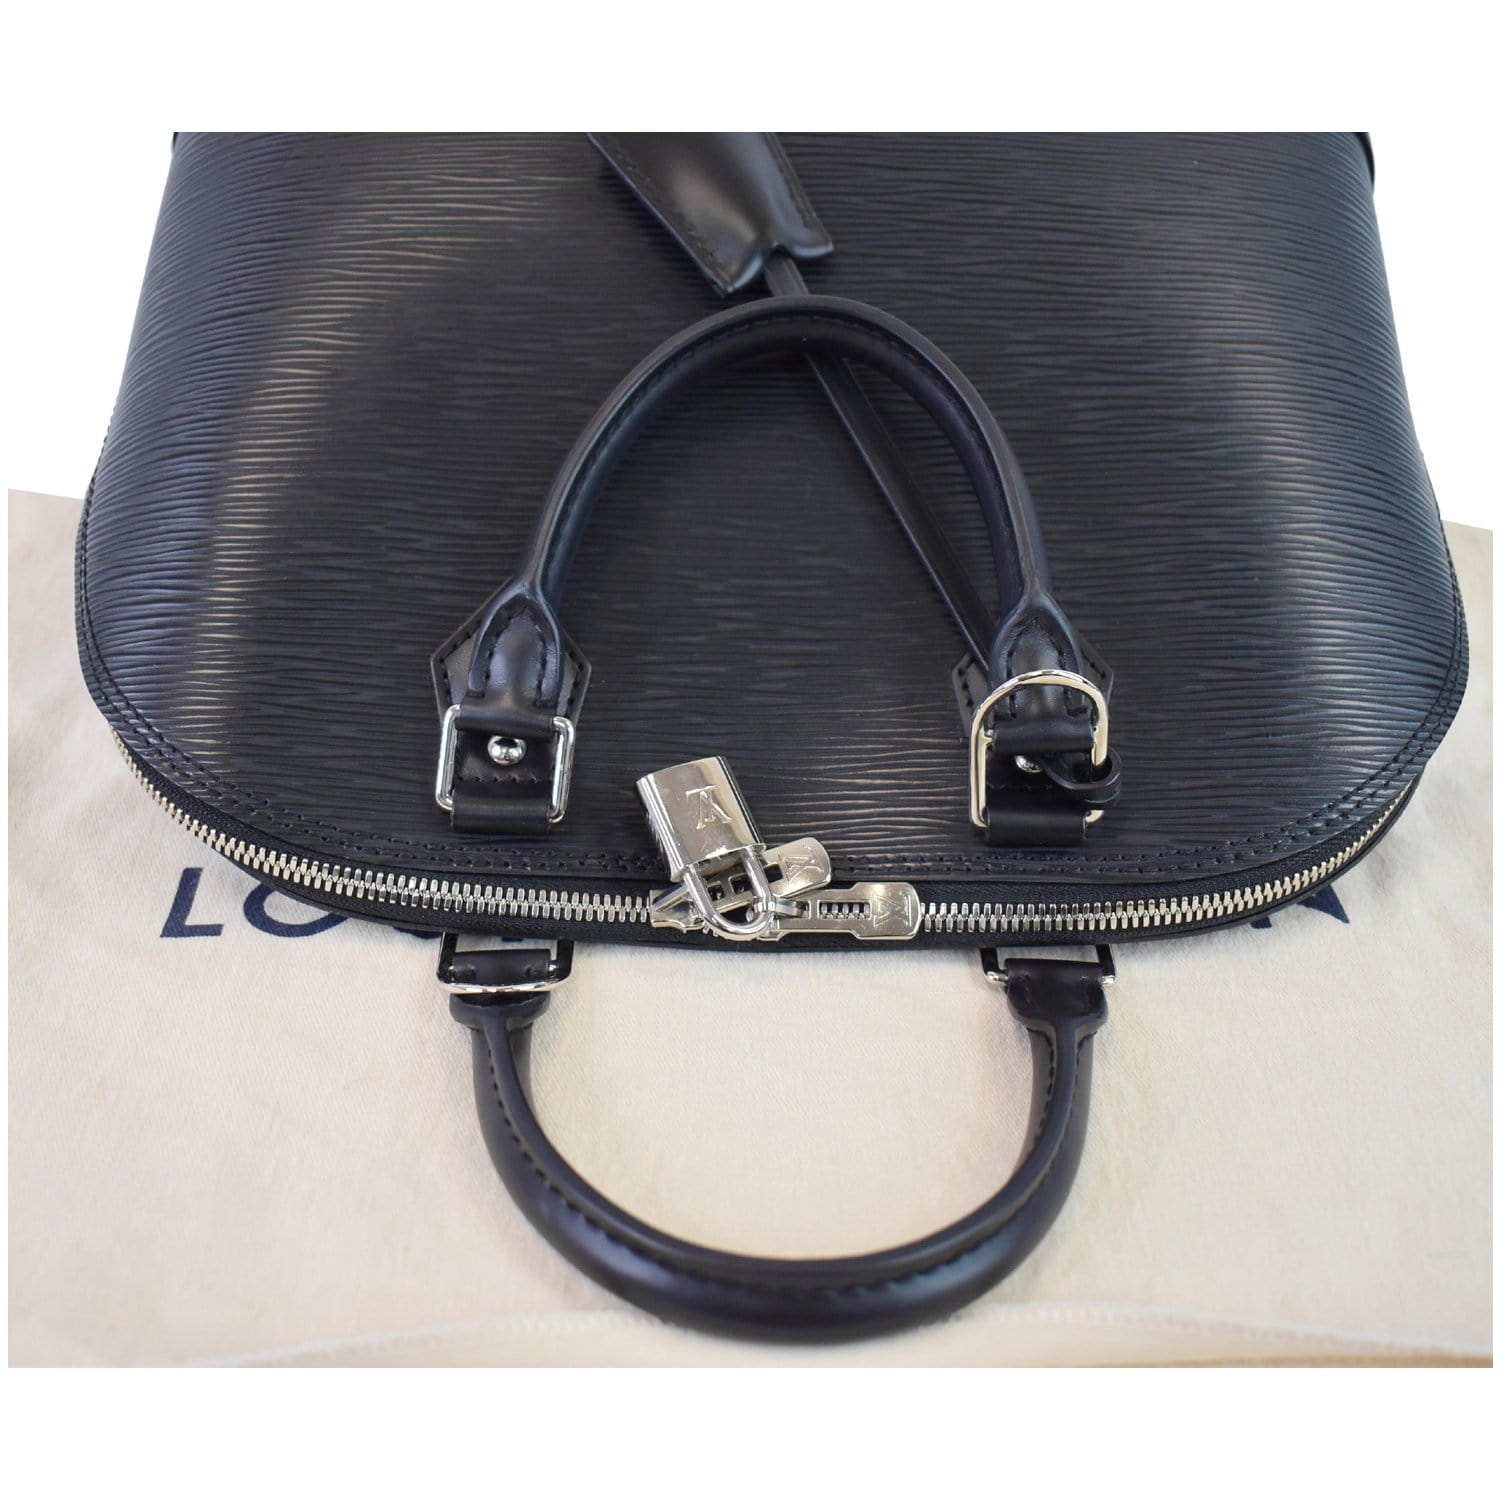 Louis Vuitton Black EPI Alma PM Handbag Satchel